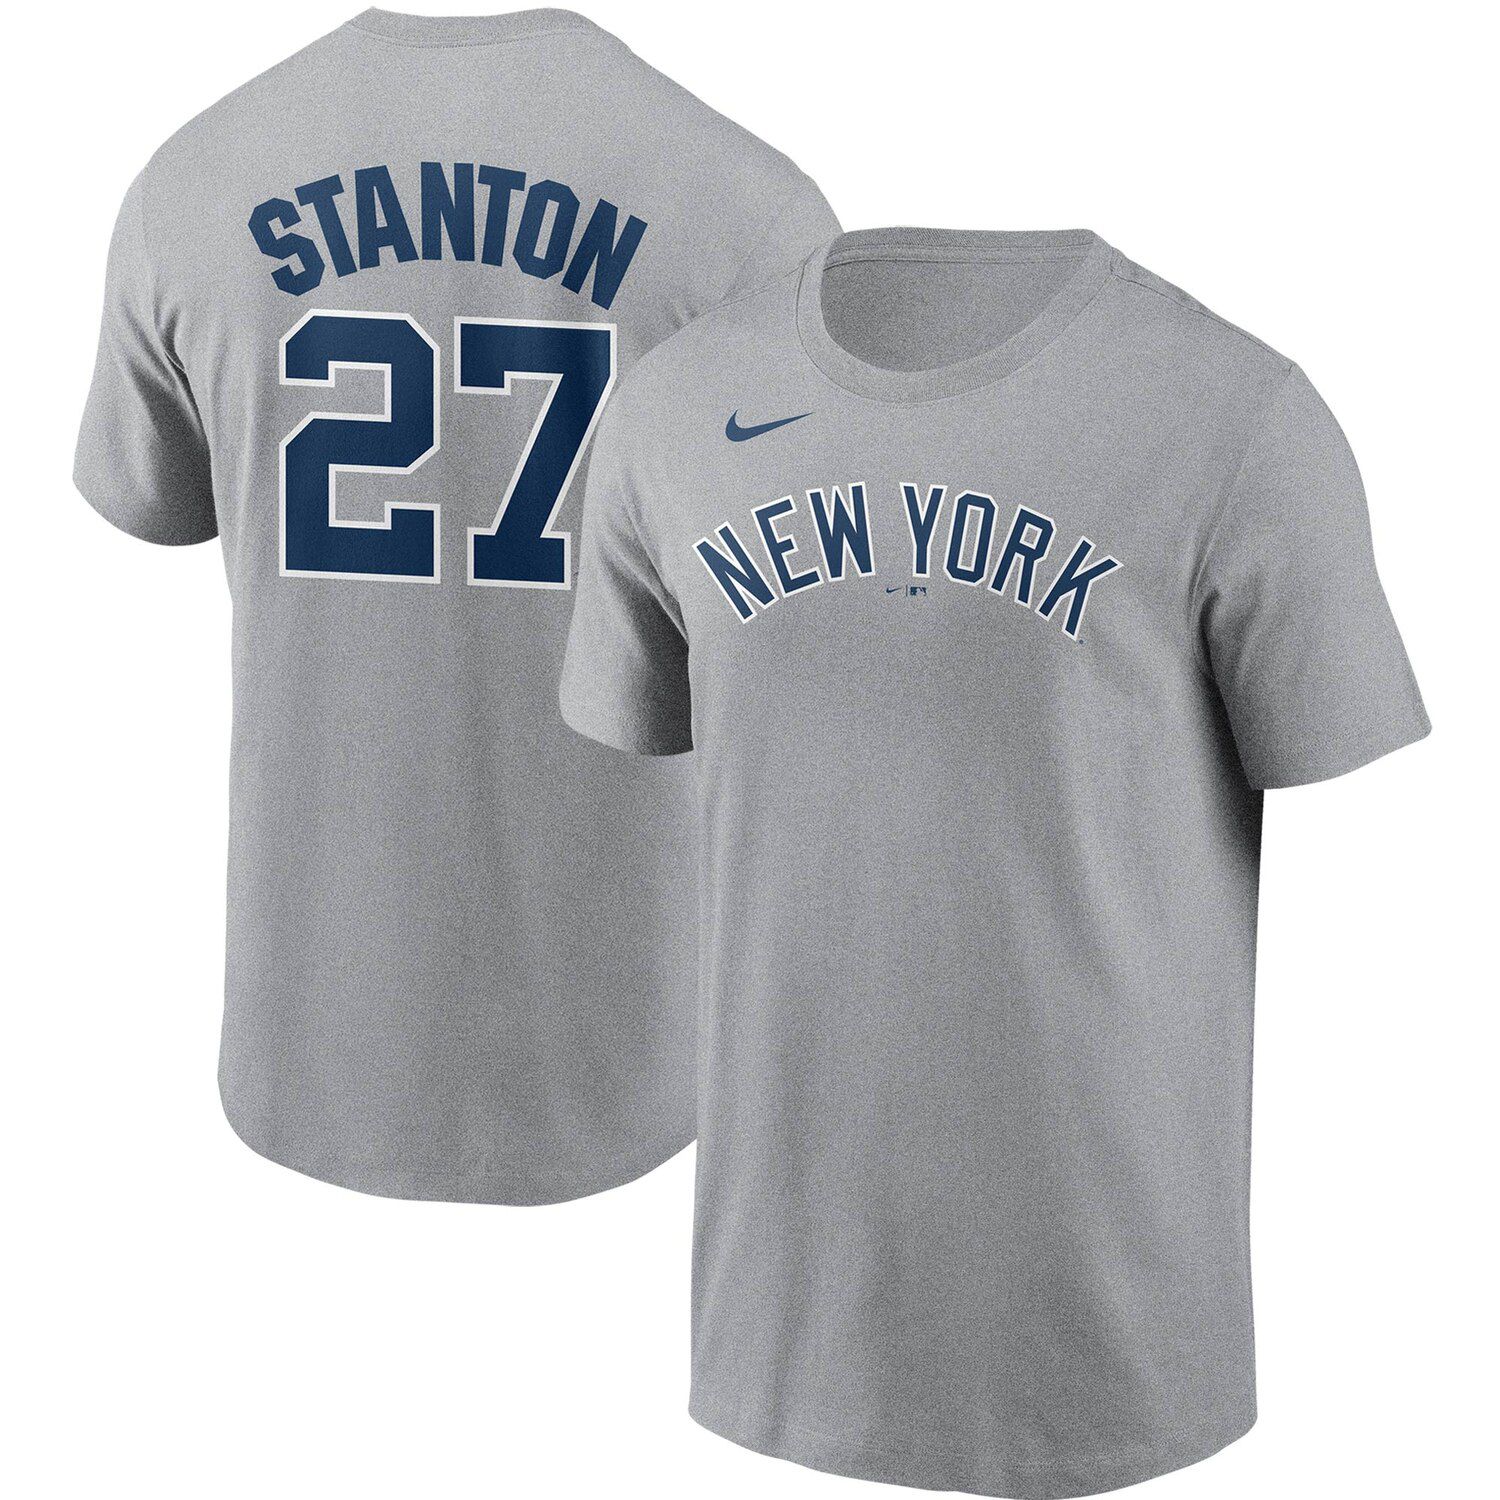 Giancarlo Stanton Gray New York Yankees 